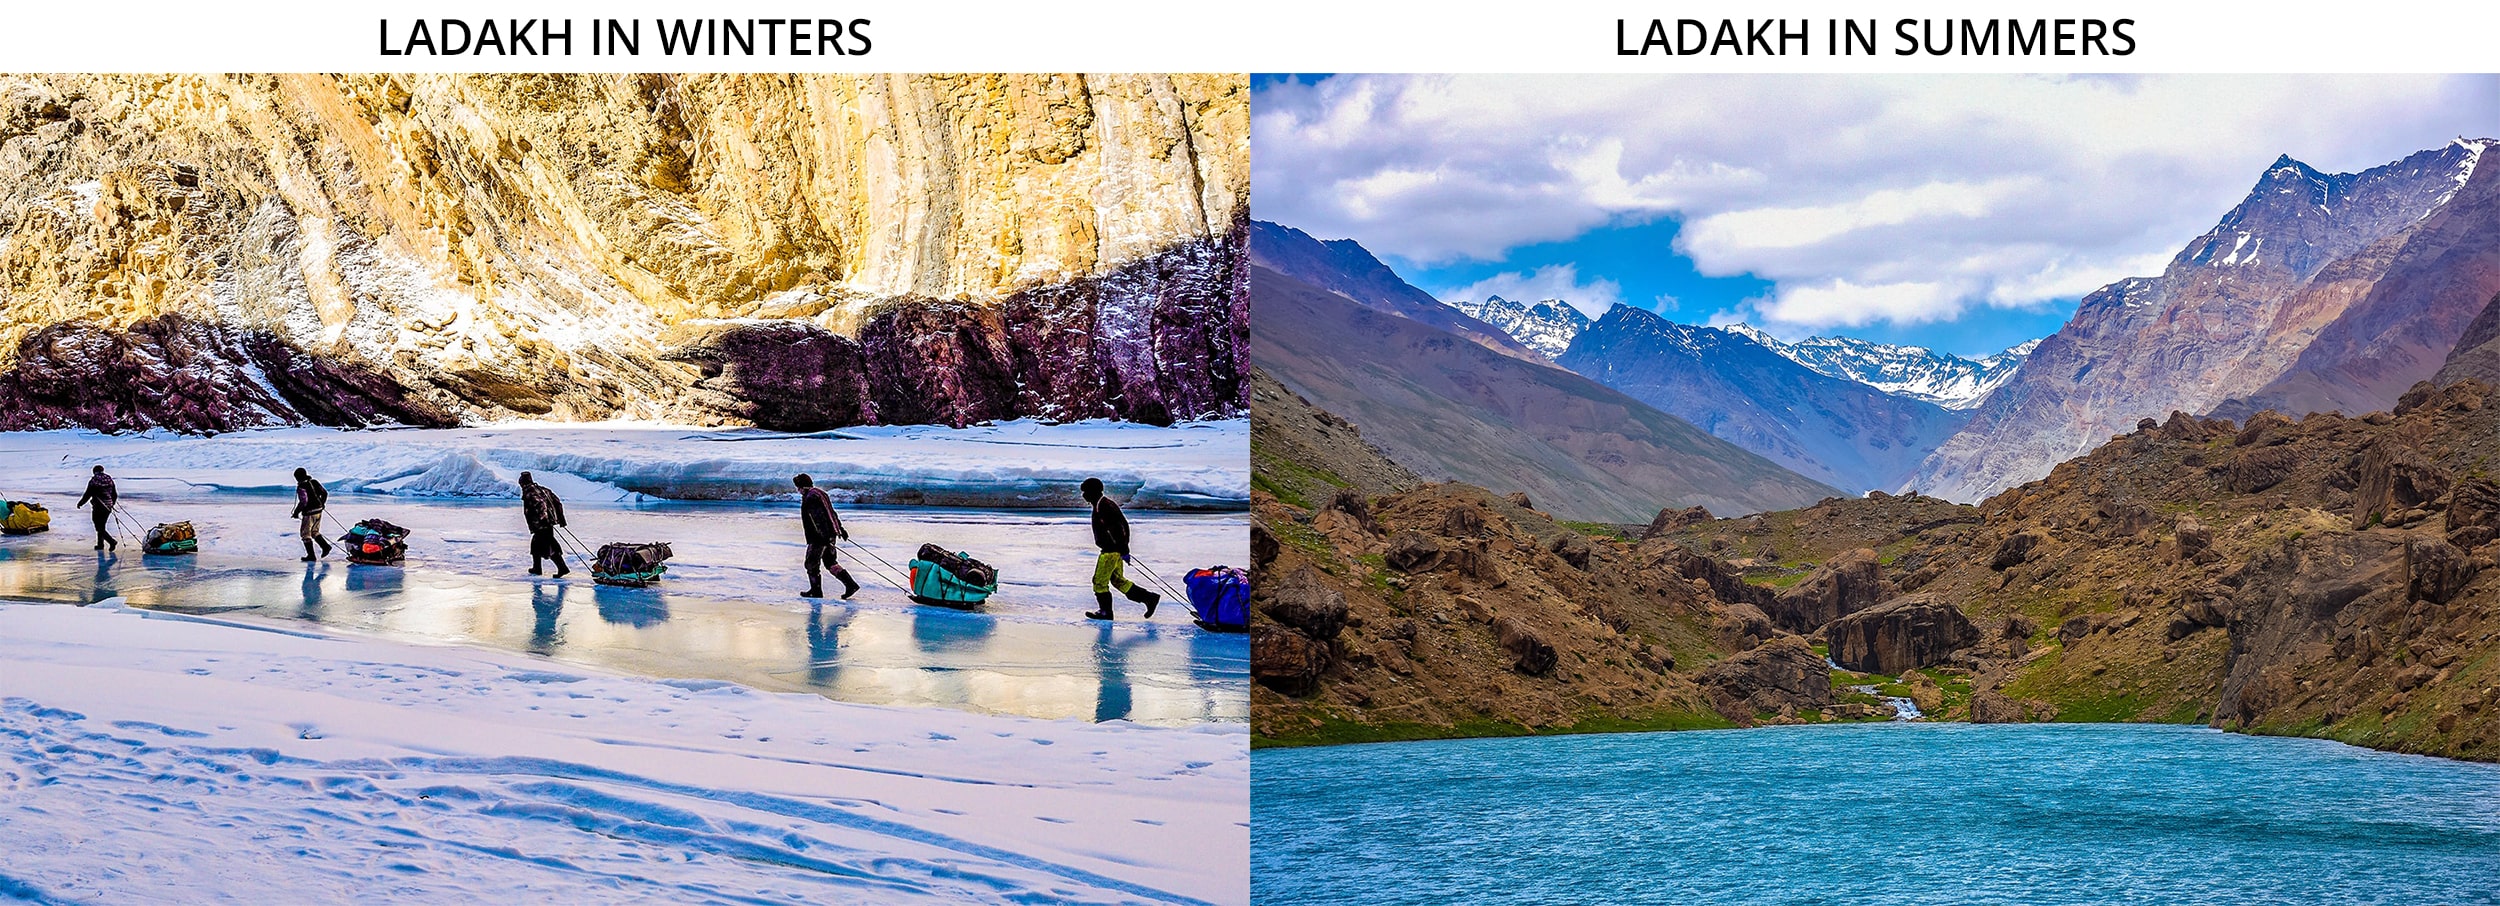 leh-ladakh-winter-summer-chadar-trek-deepak-tal-images-pictures